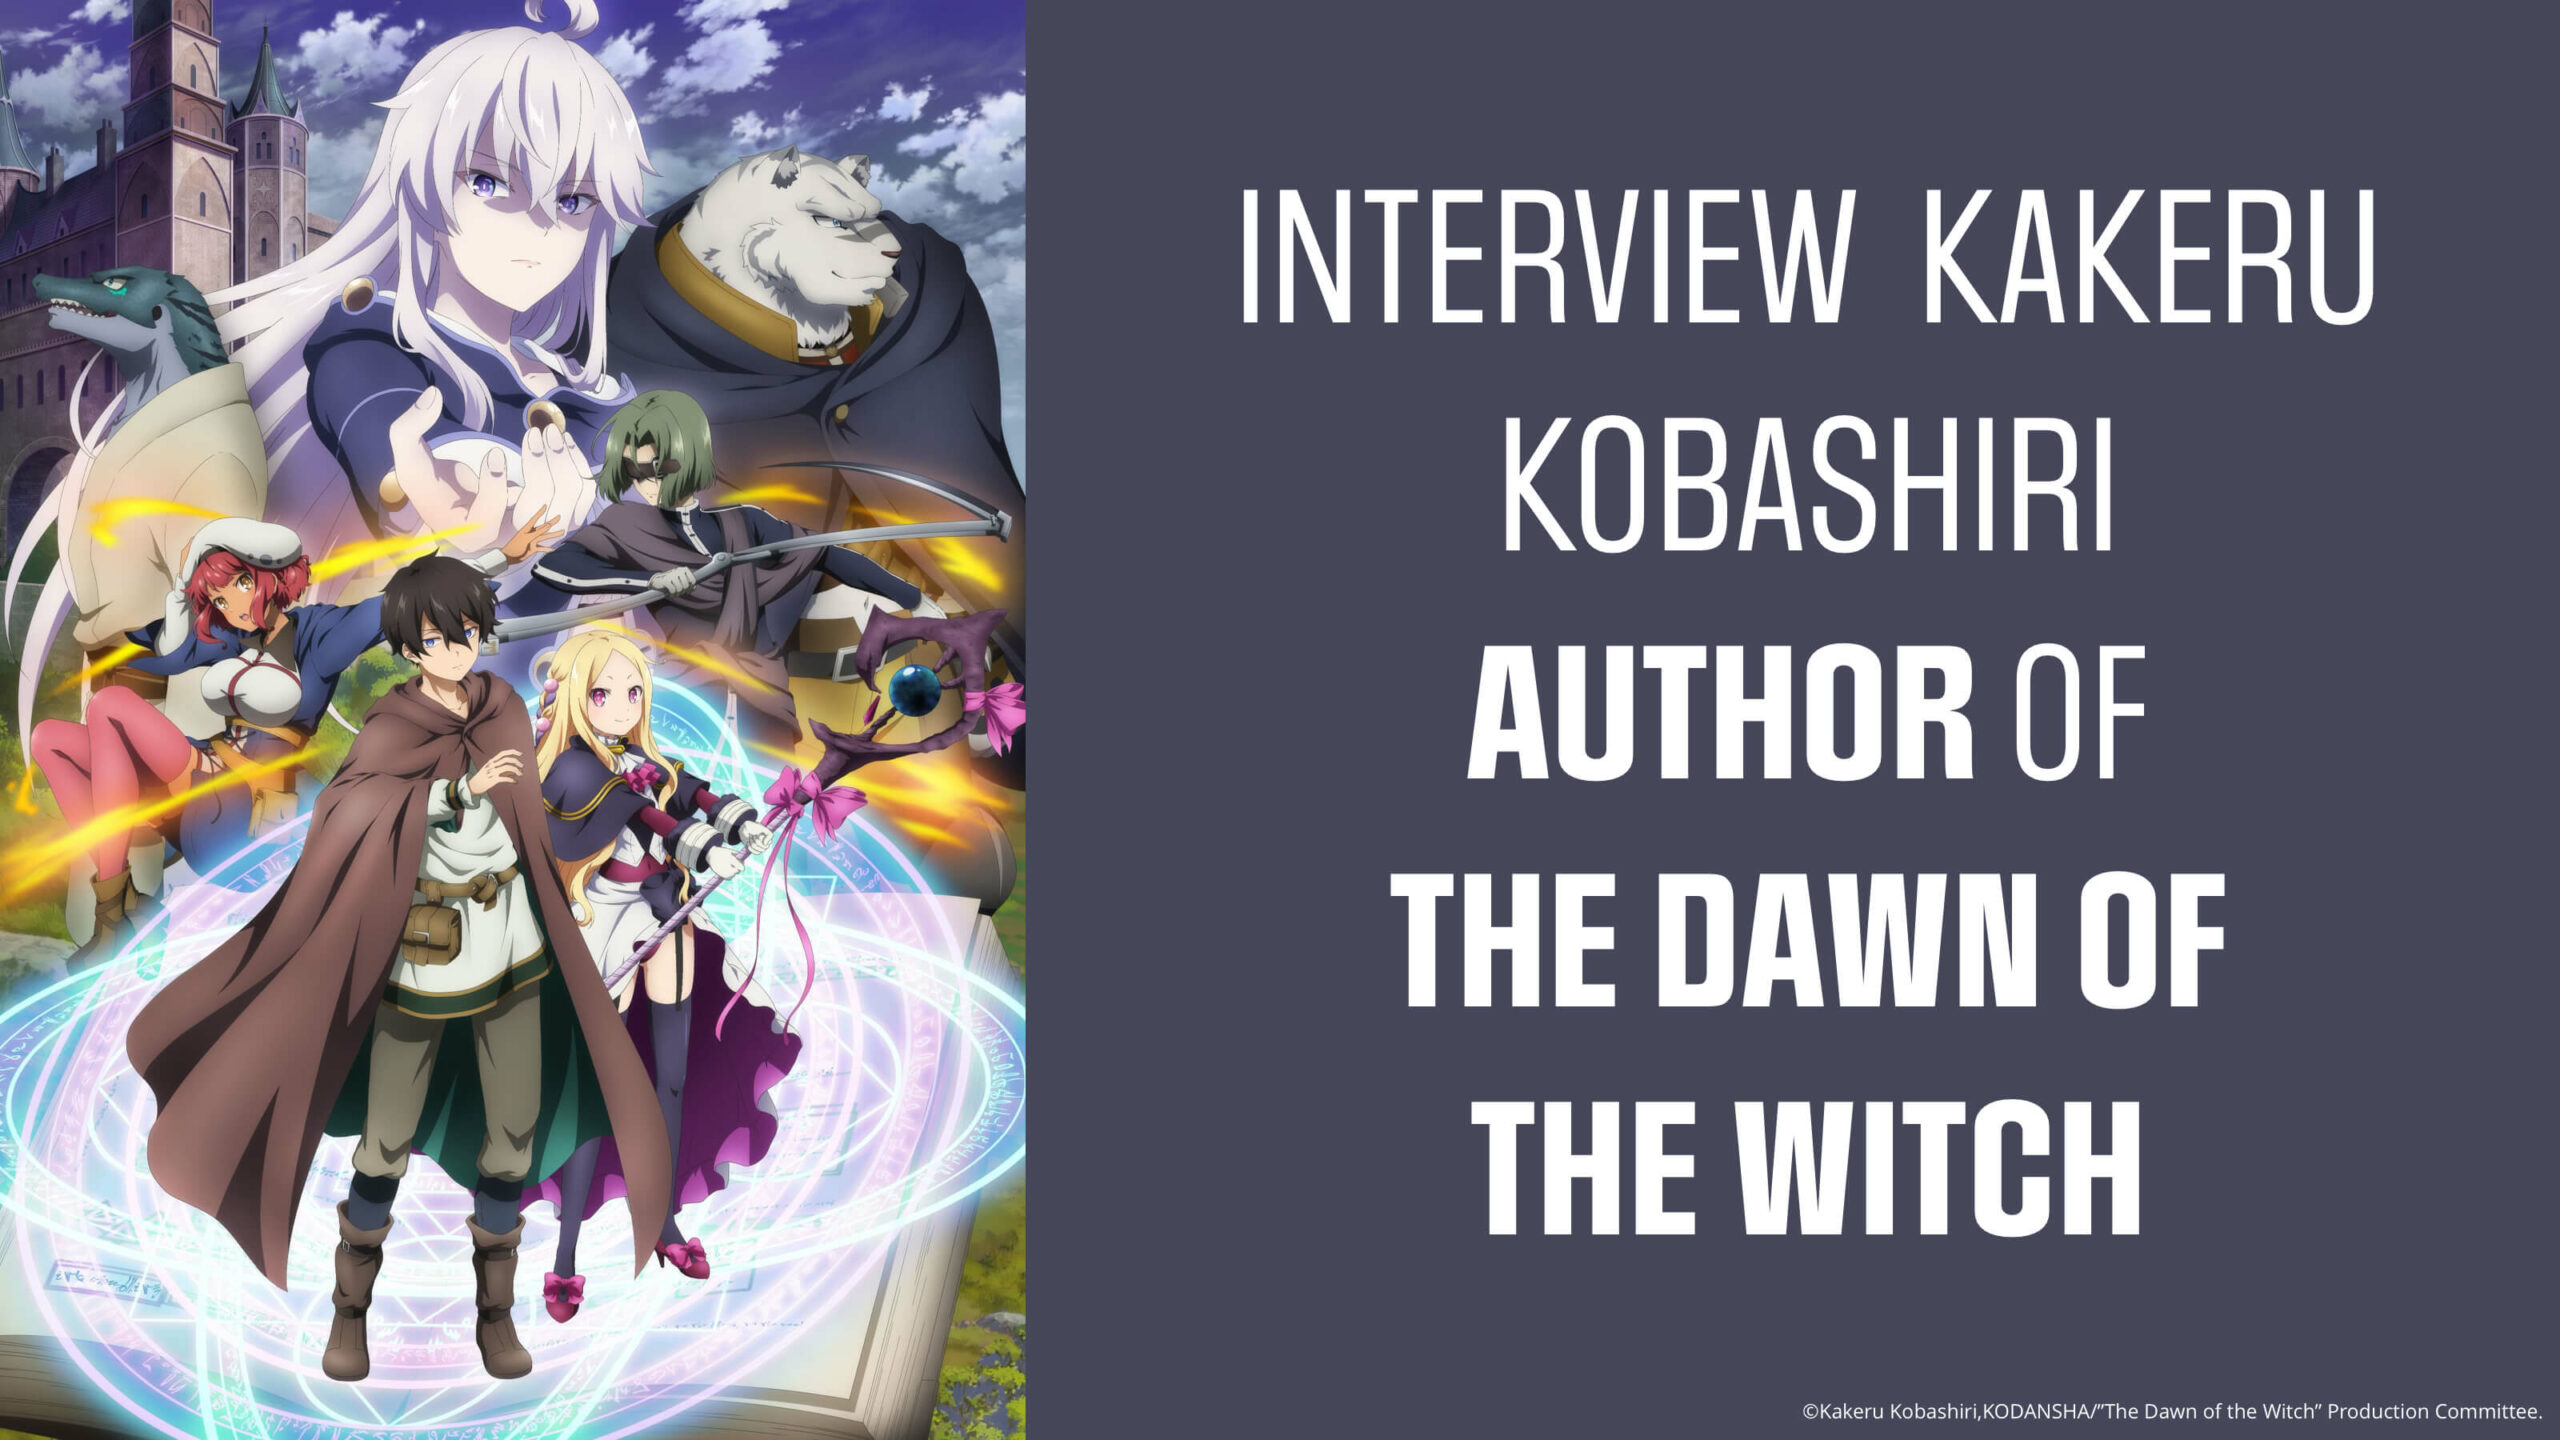 The Dawn of the Witch 2 (light novel) by Kobashiri, Kakeru